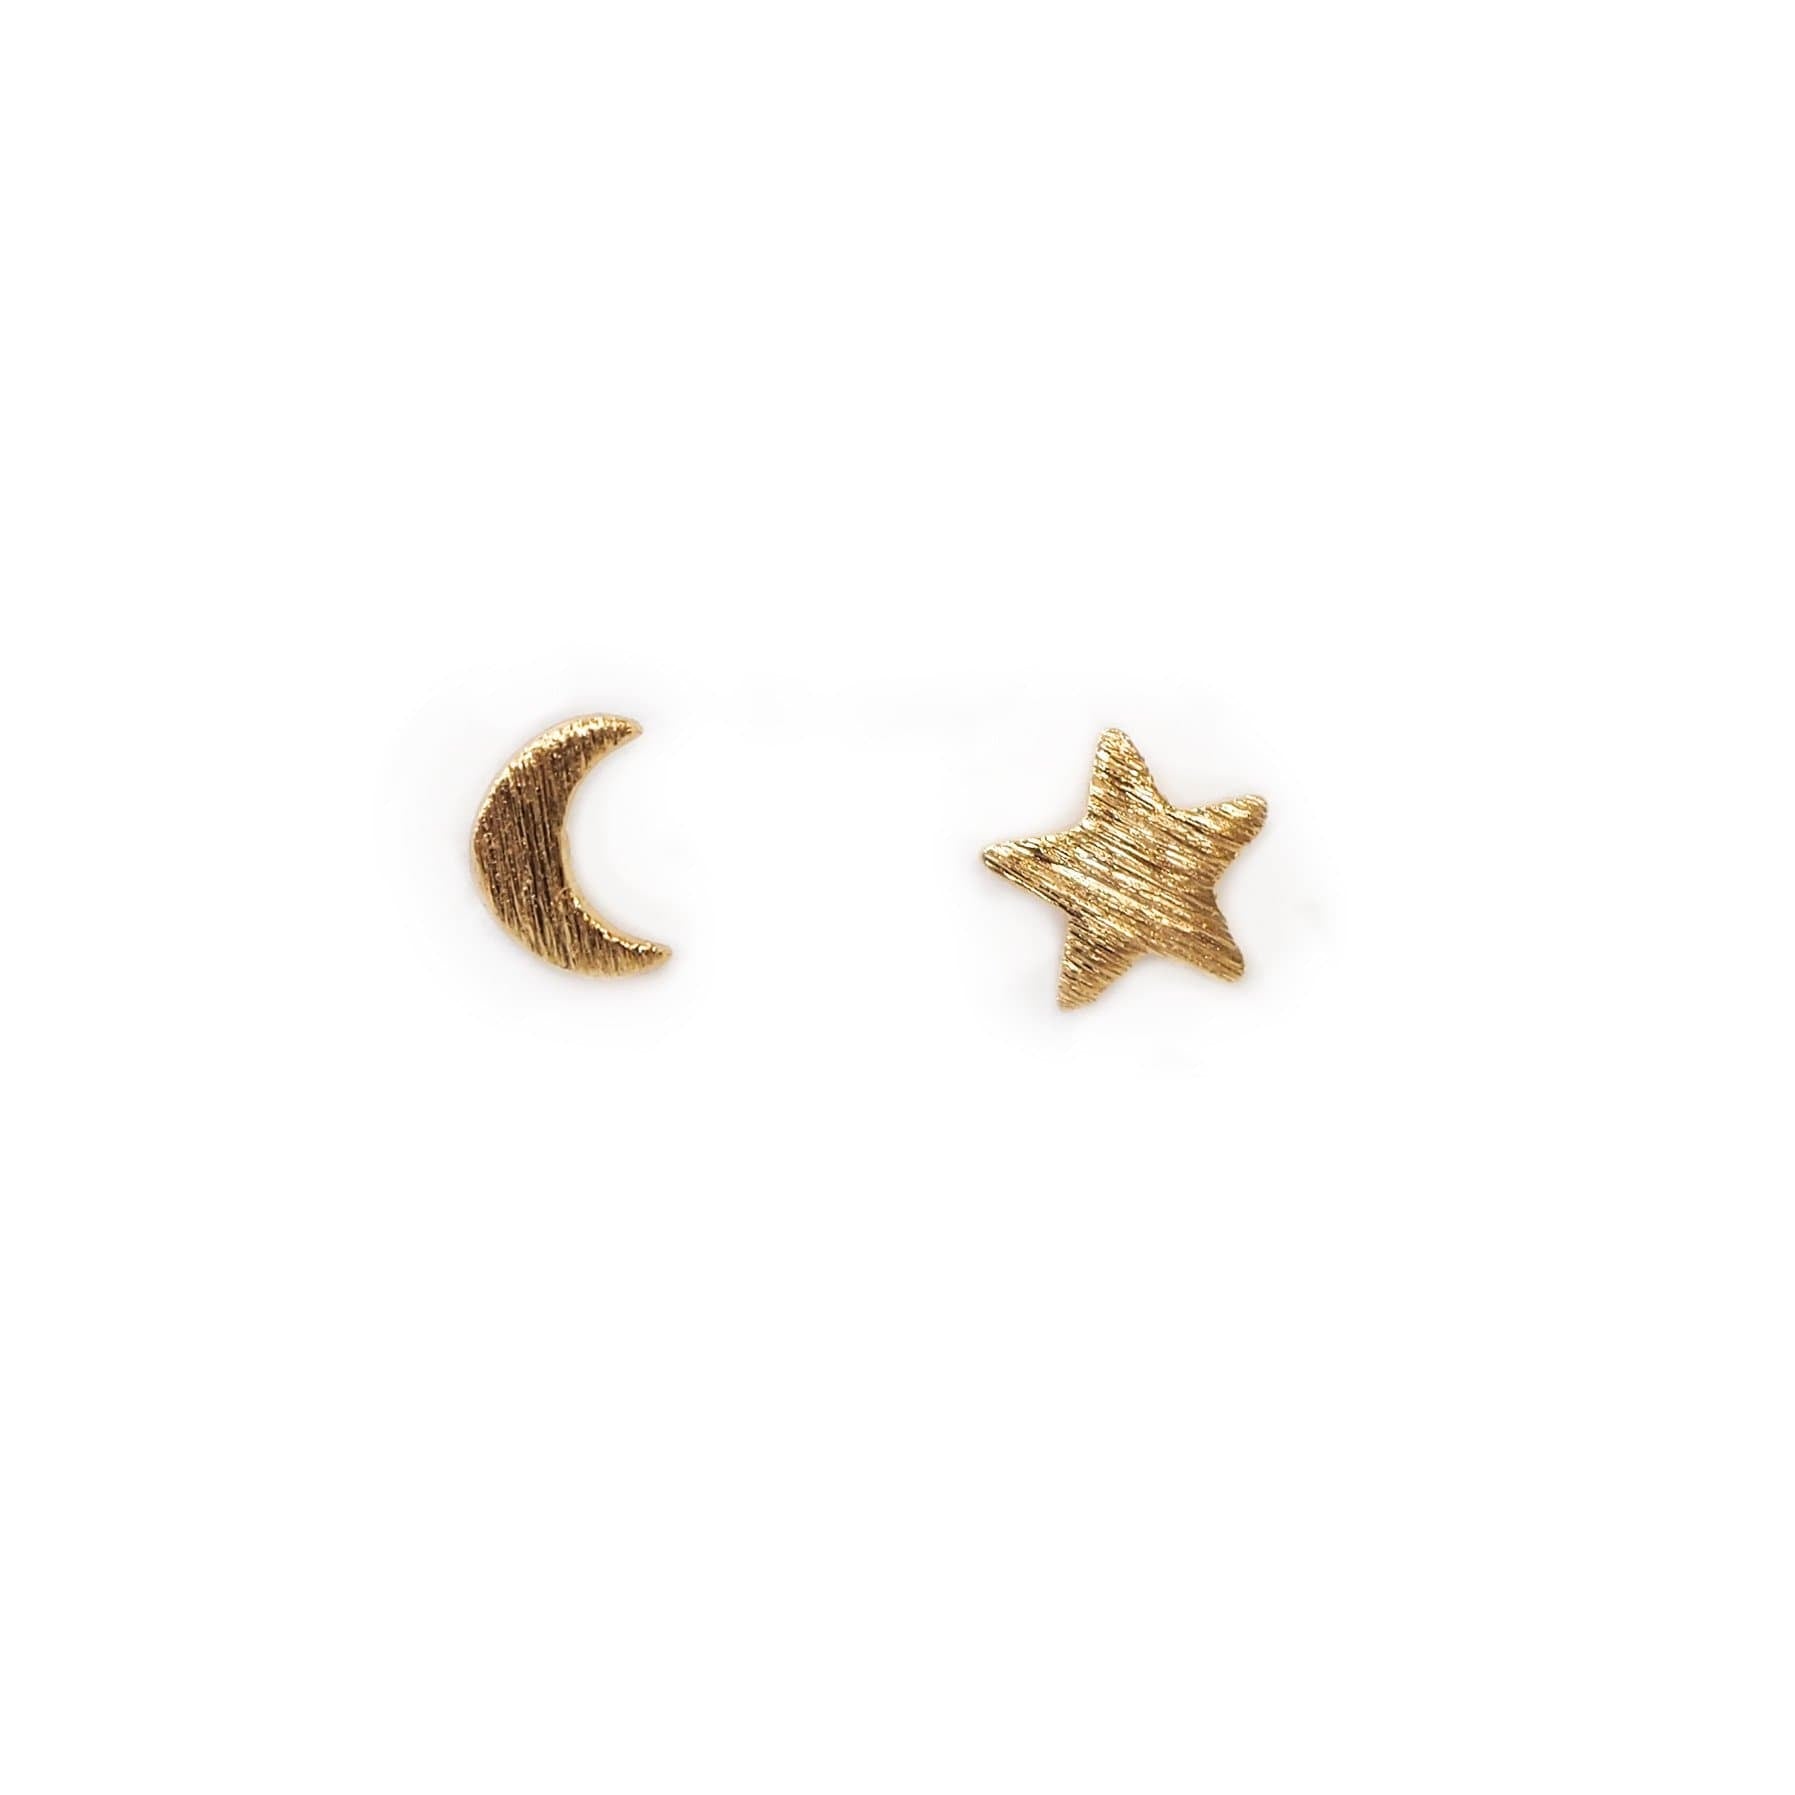  Moon & Star Stud Earrings, Earrings, adorn512, adorn512